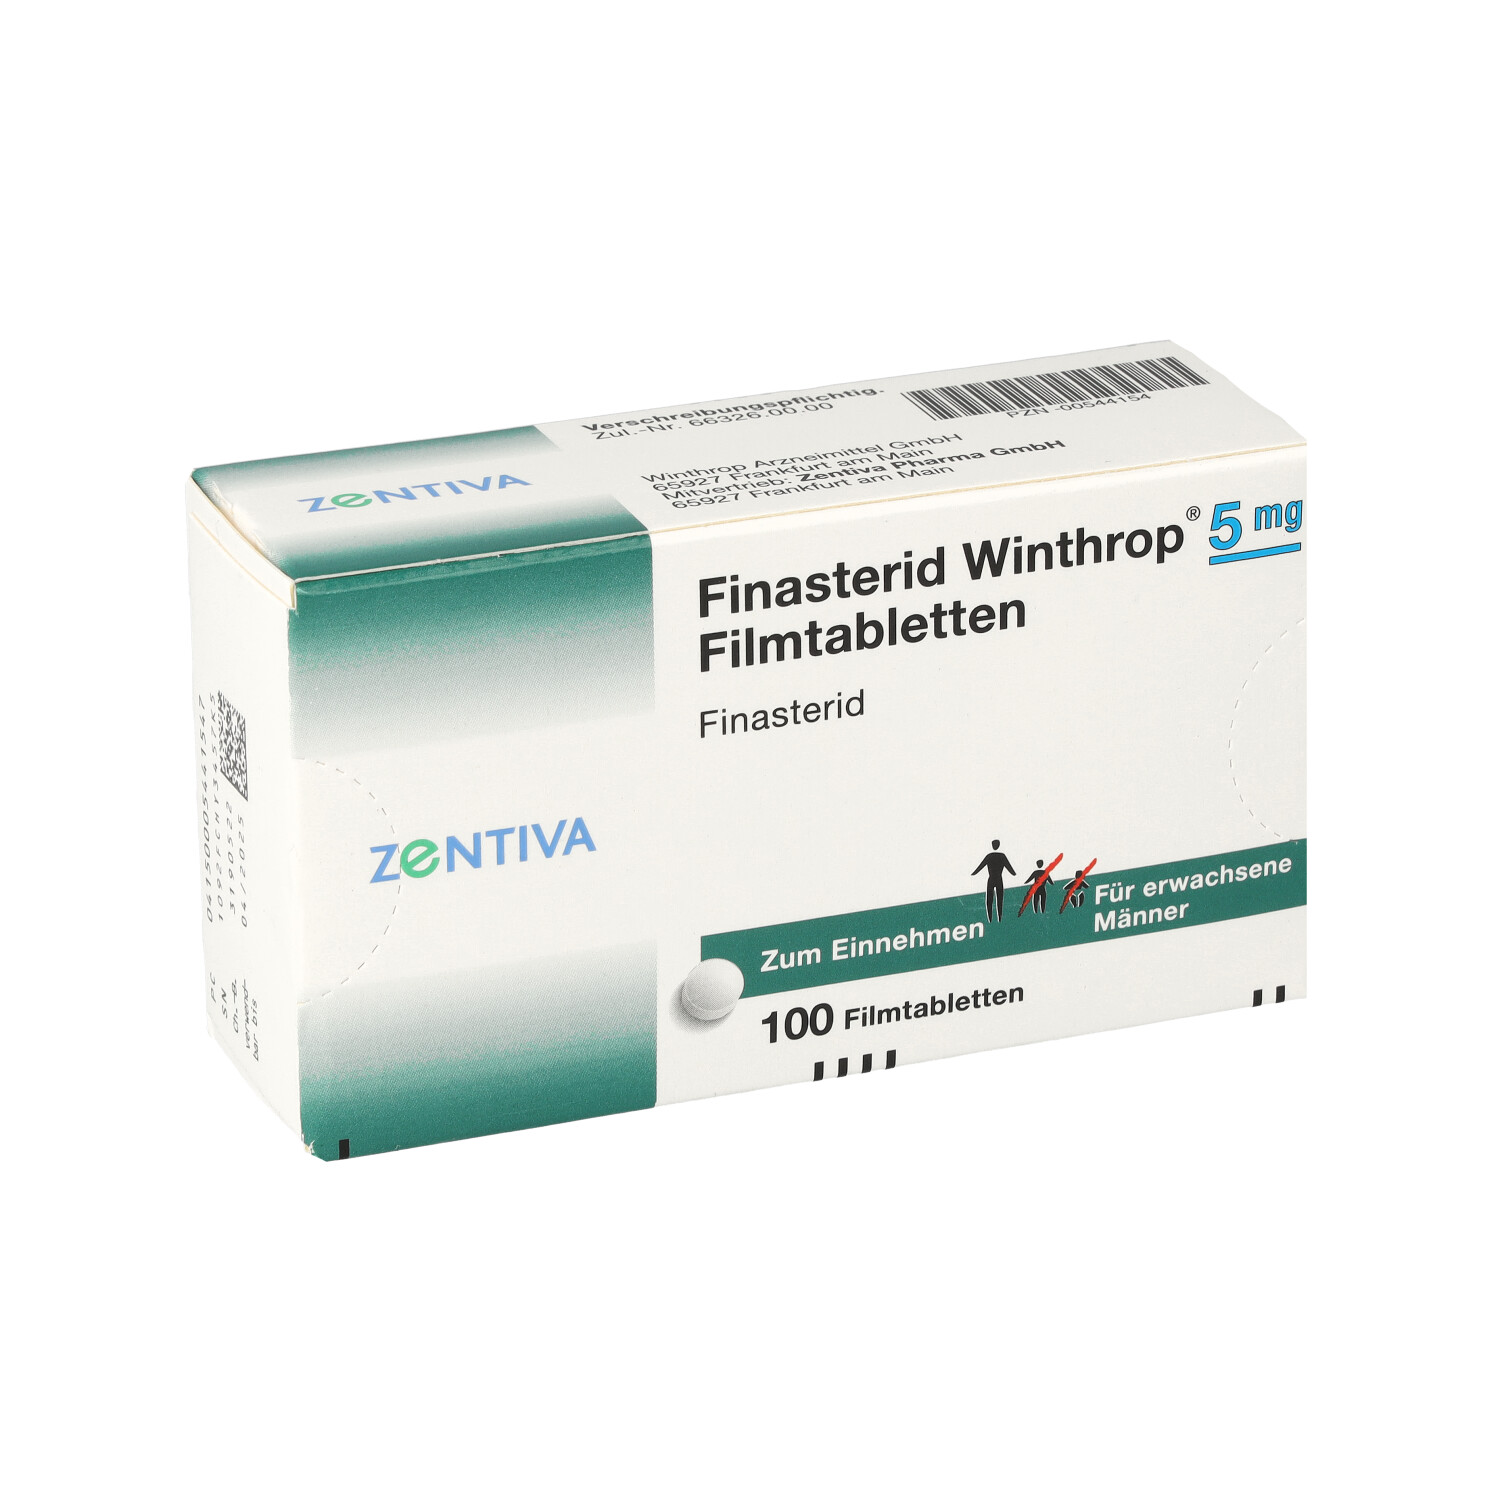 FINASTERID Winthrop 5 mg Filmtabletten